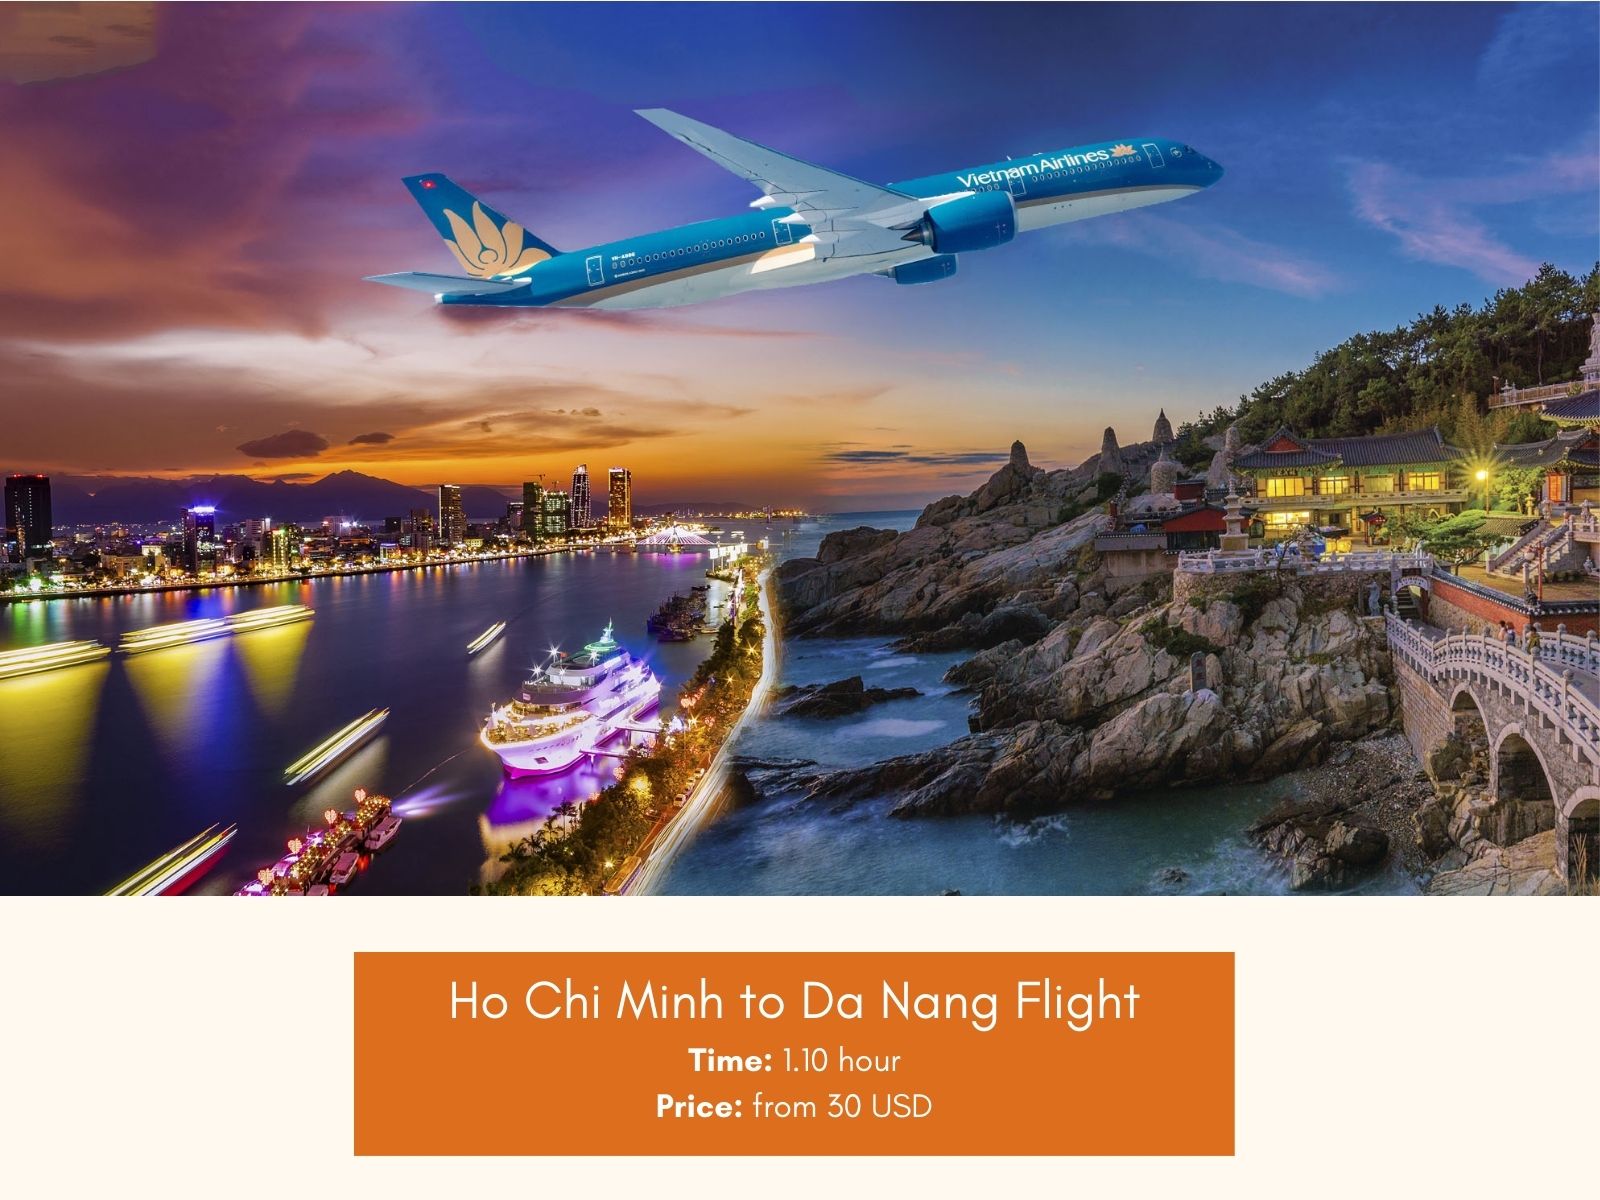 Ho Chi Minh to Da Nang Flight